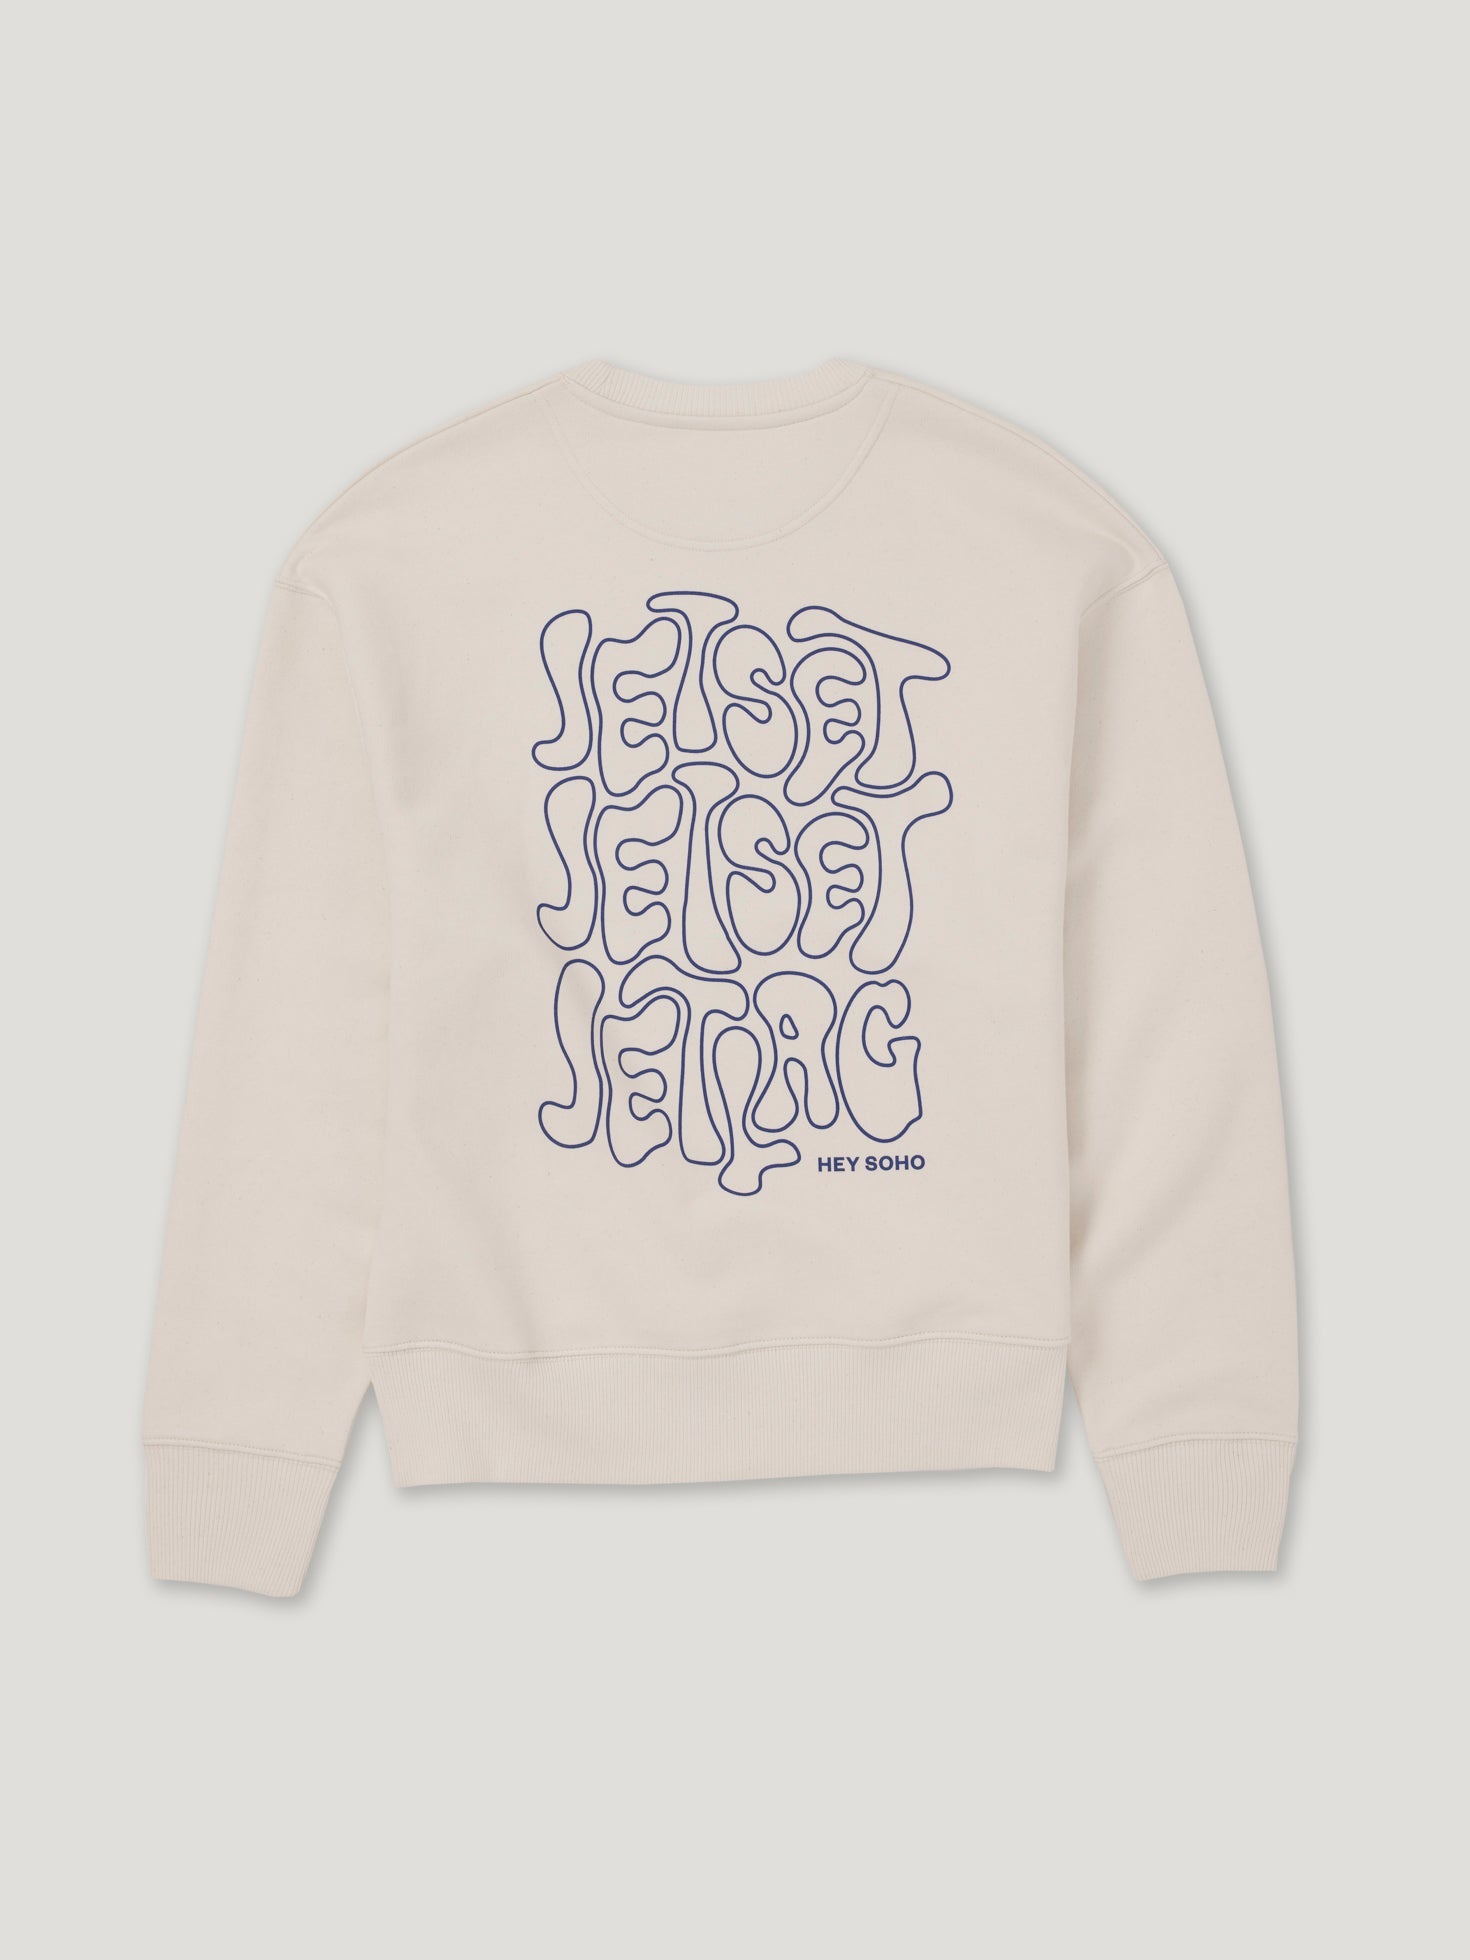 JETSET Sweater - heysoho